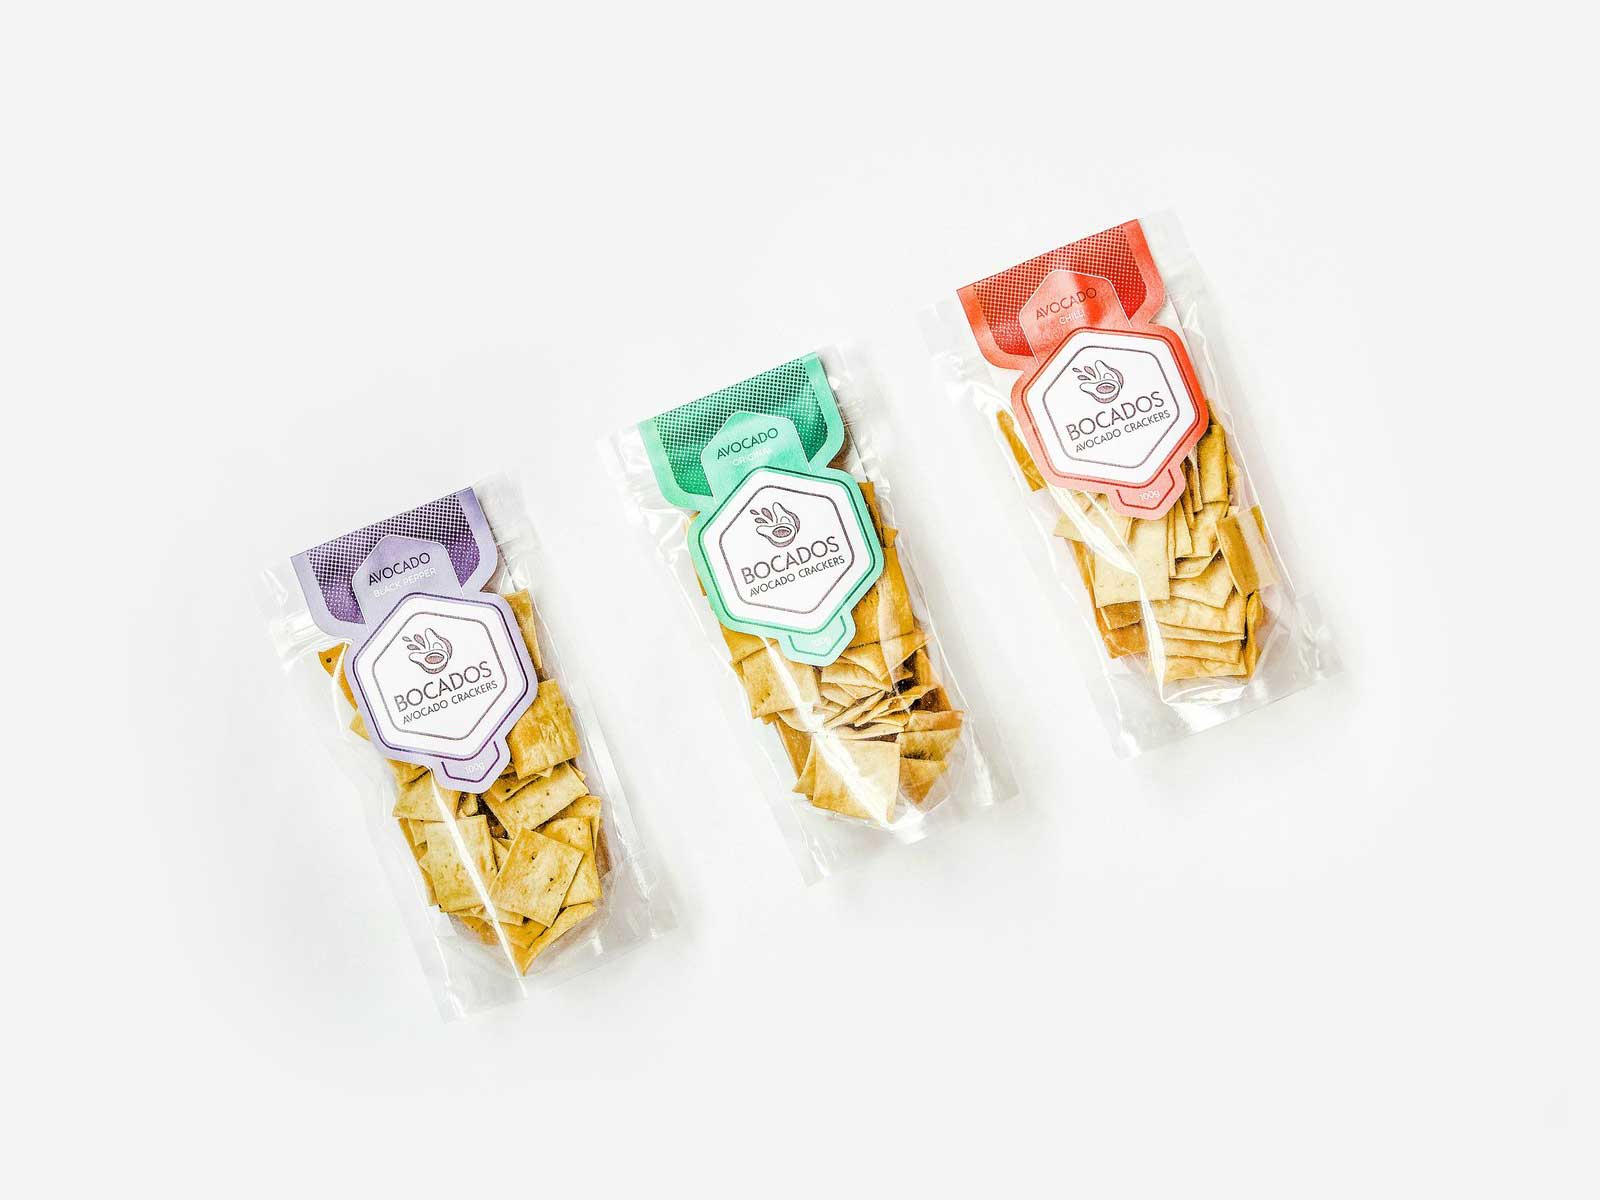 bocados vegan crackers packaging design